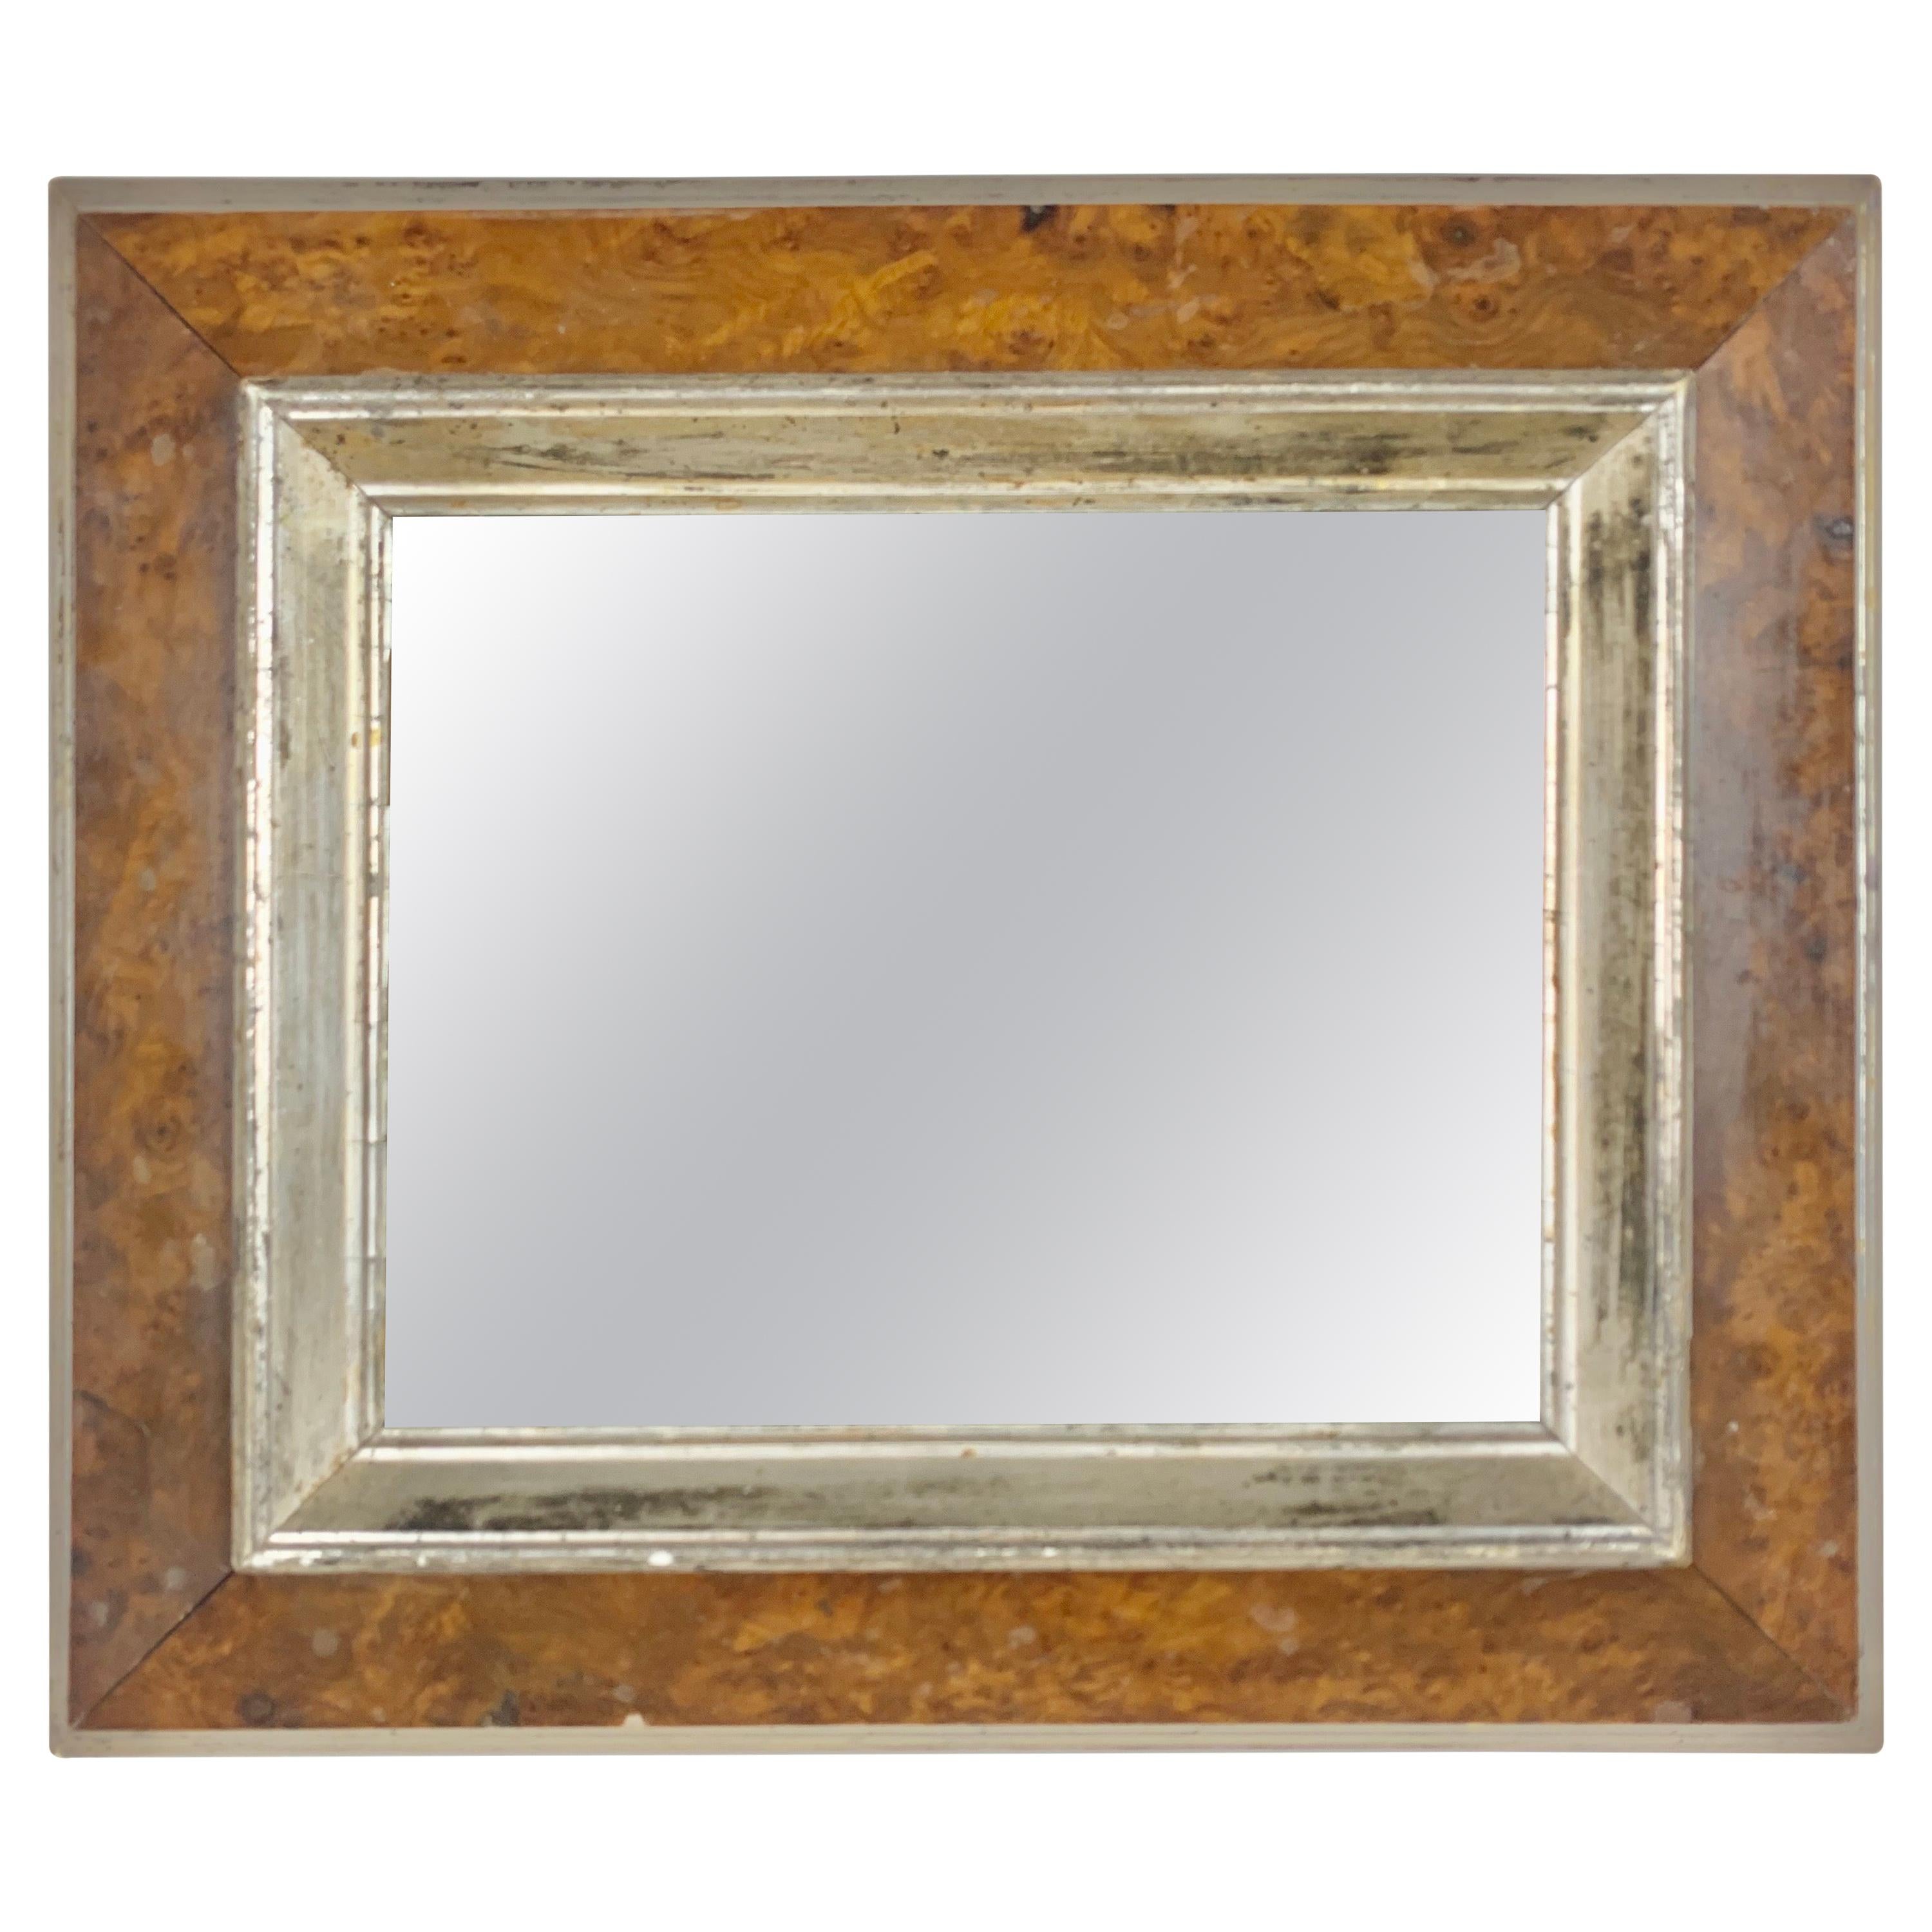 English Bird's-Eye Maple Frame with Mirror